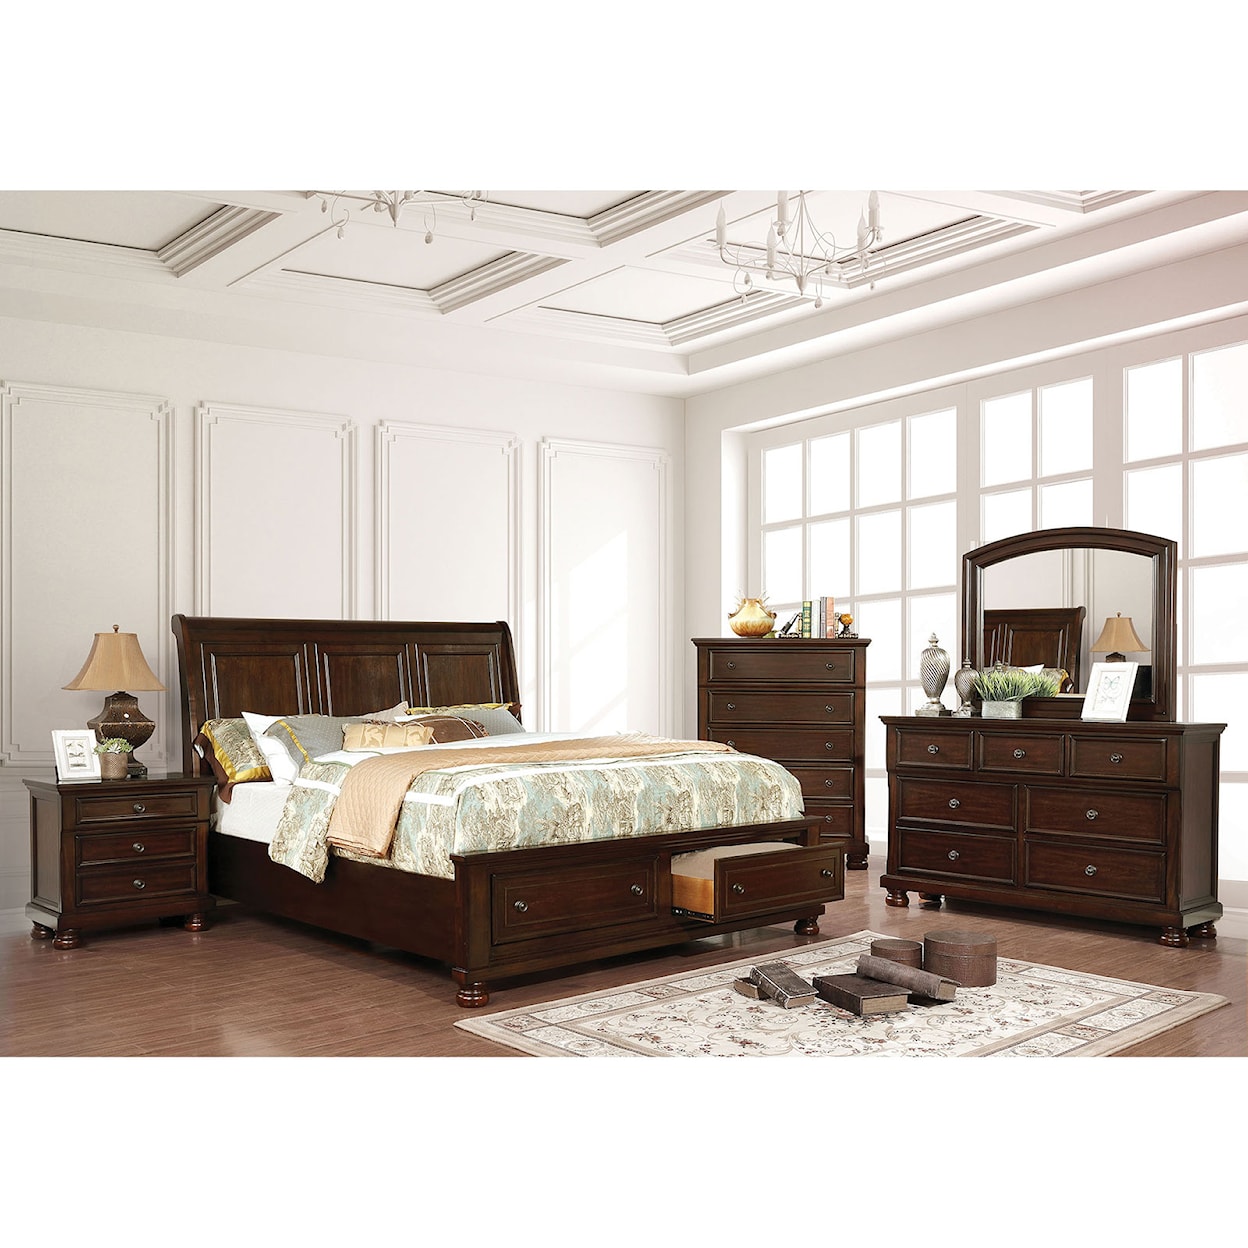 Furniture of America Castor California King Bedroom Group